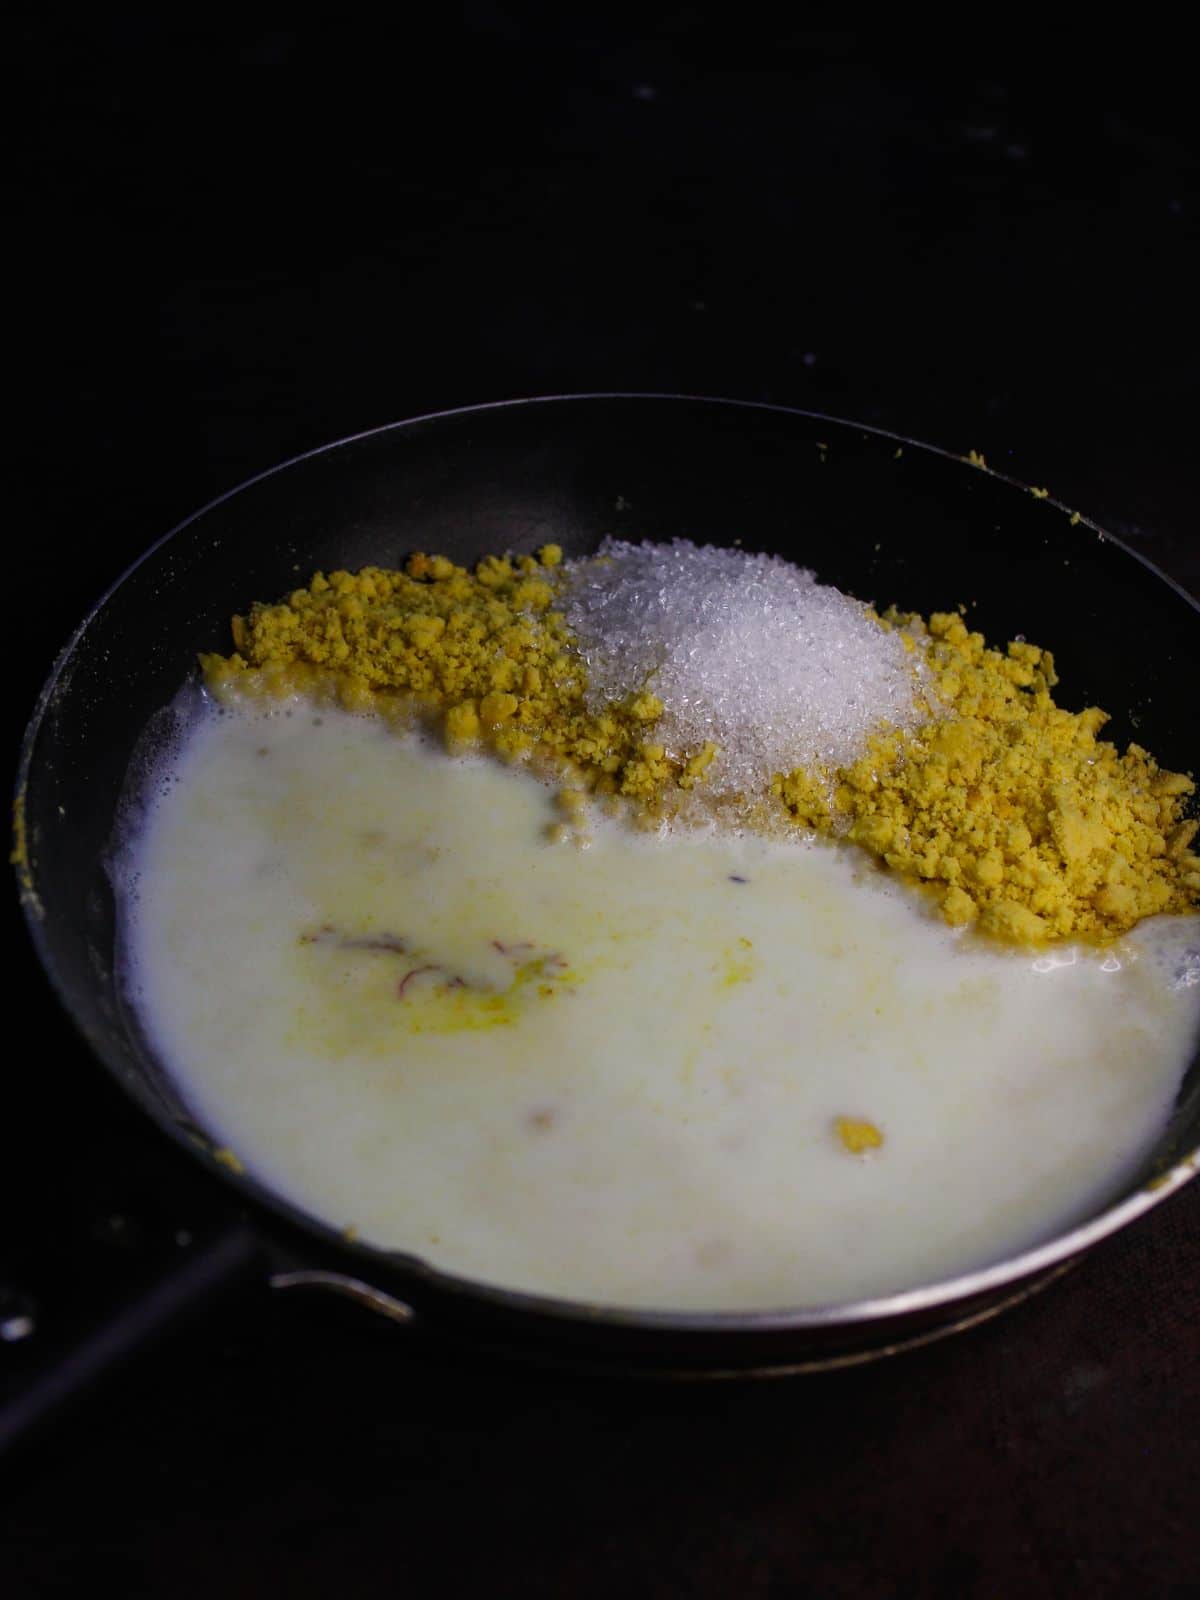 Add sugar, milk, kesar to the besan in a pan